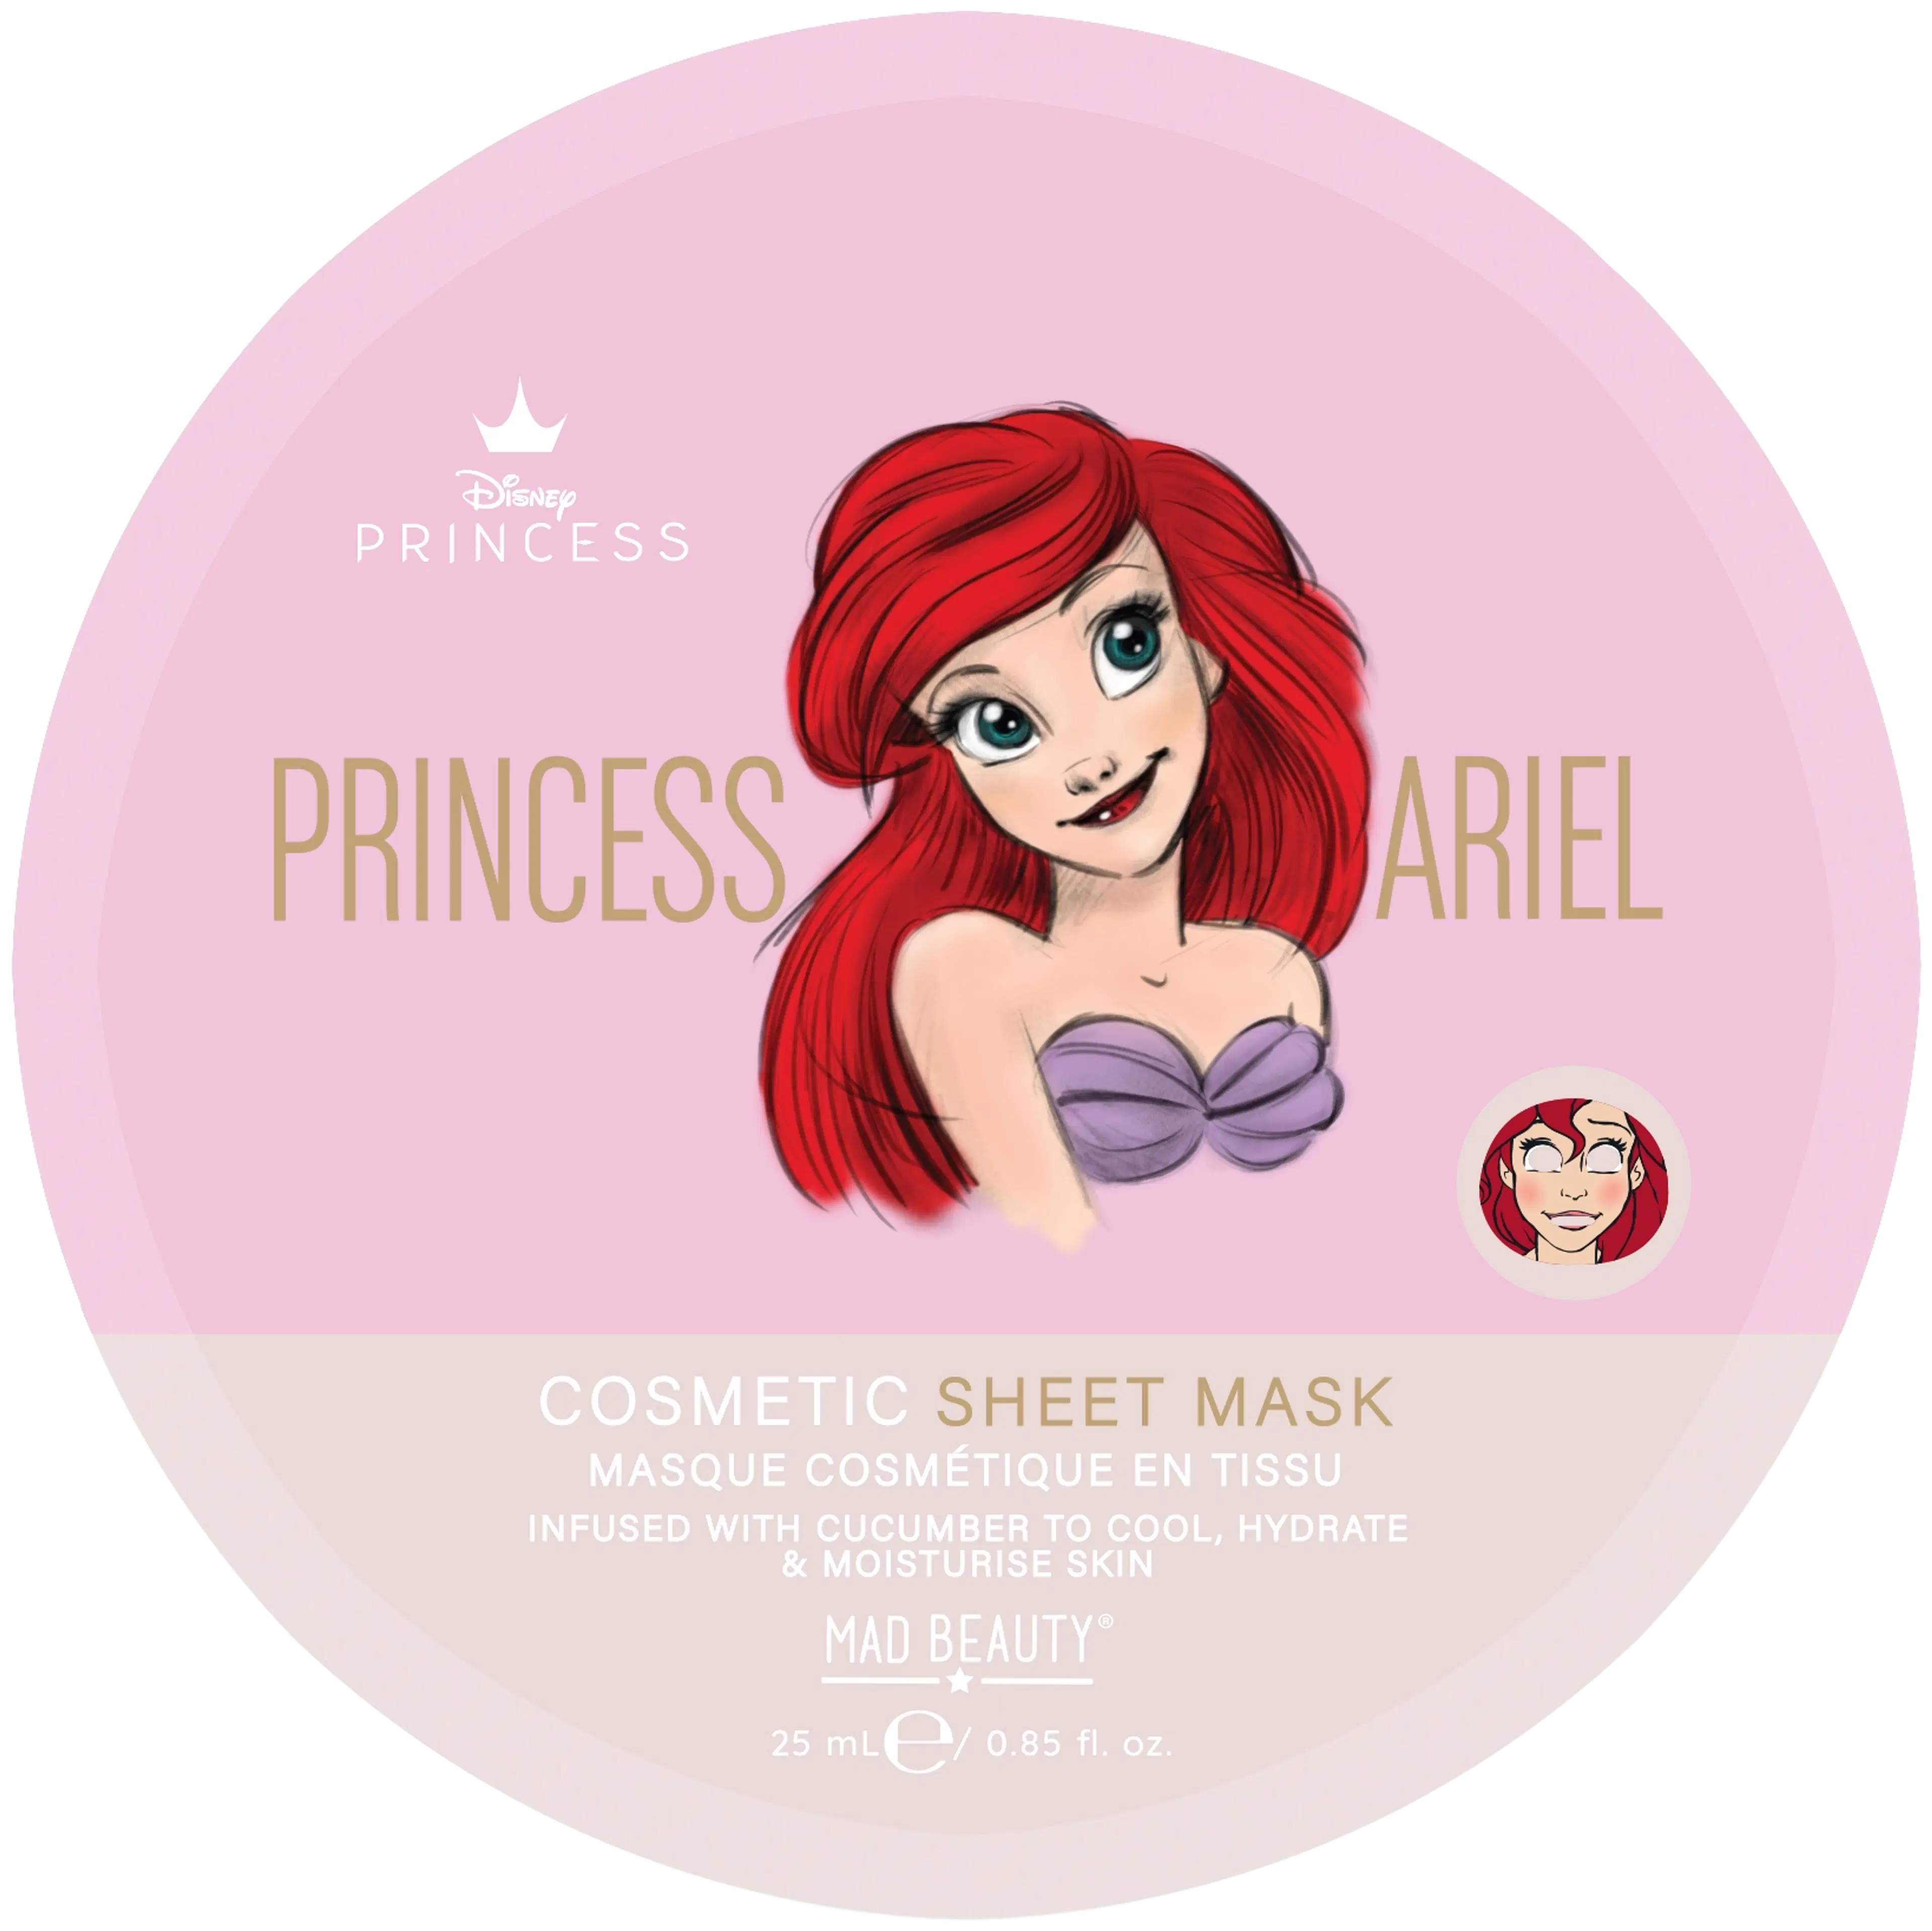 Mad Beauty Pure Princess Ariel Cosmetic Sheet Mask